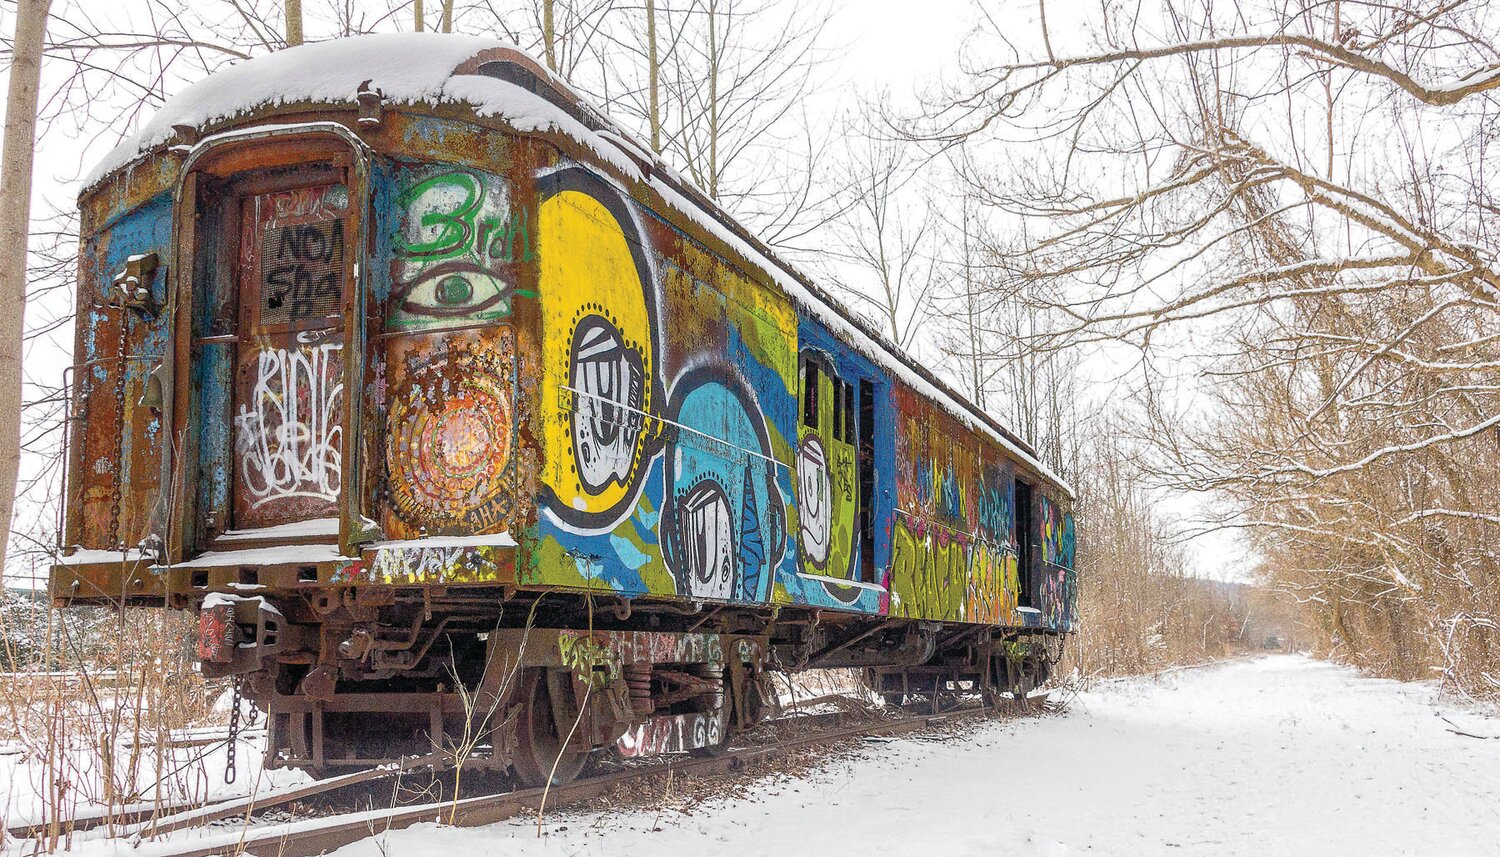 “Graffiti Train (North) in Snow” is by Stephen Harris.